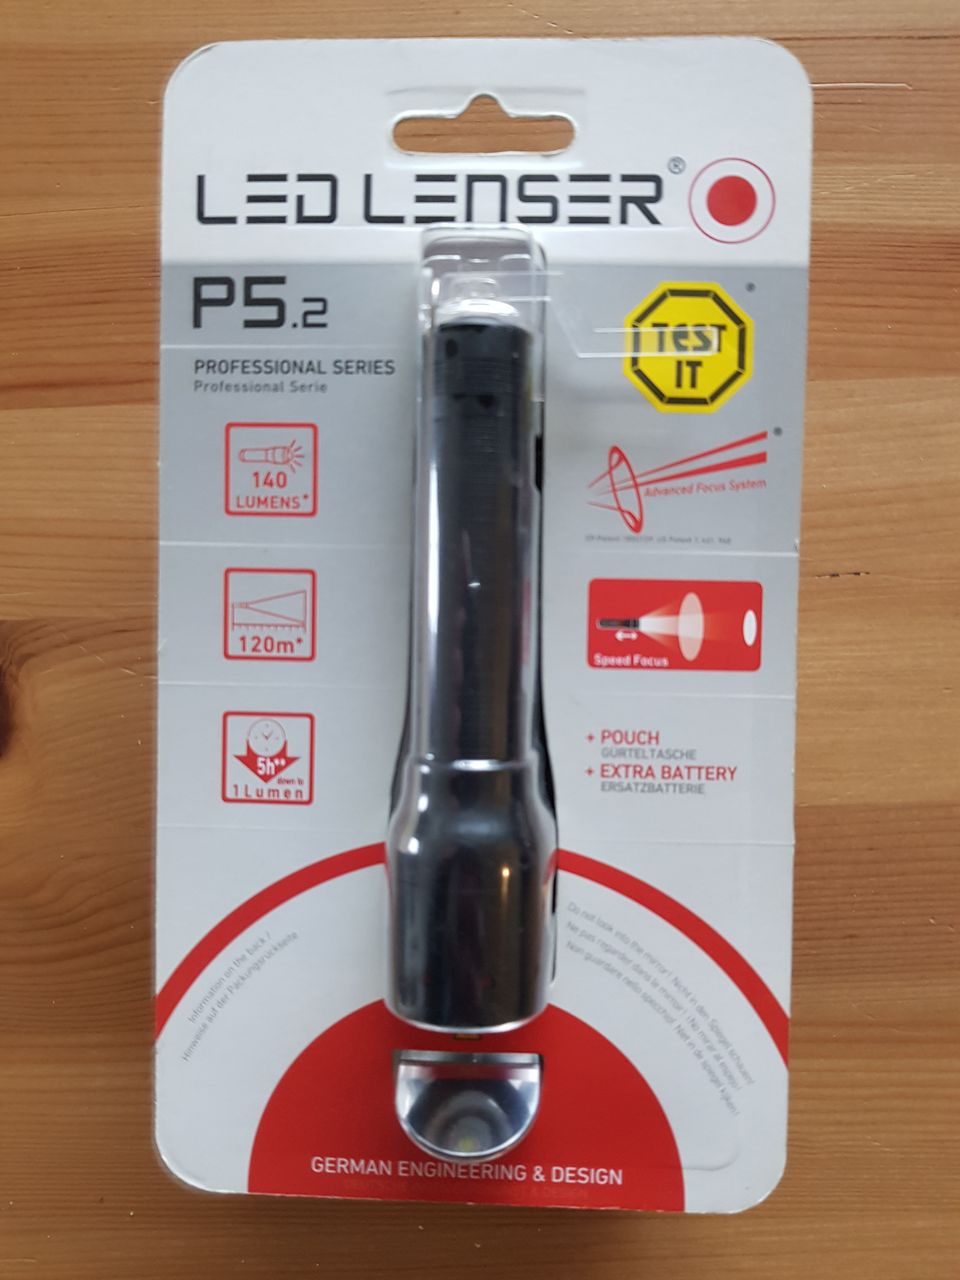 Taskulamppu Led Lenser P5.2 uusi.